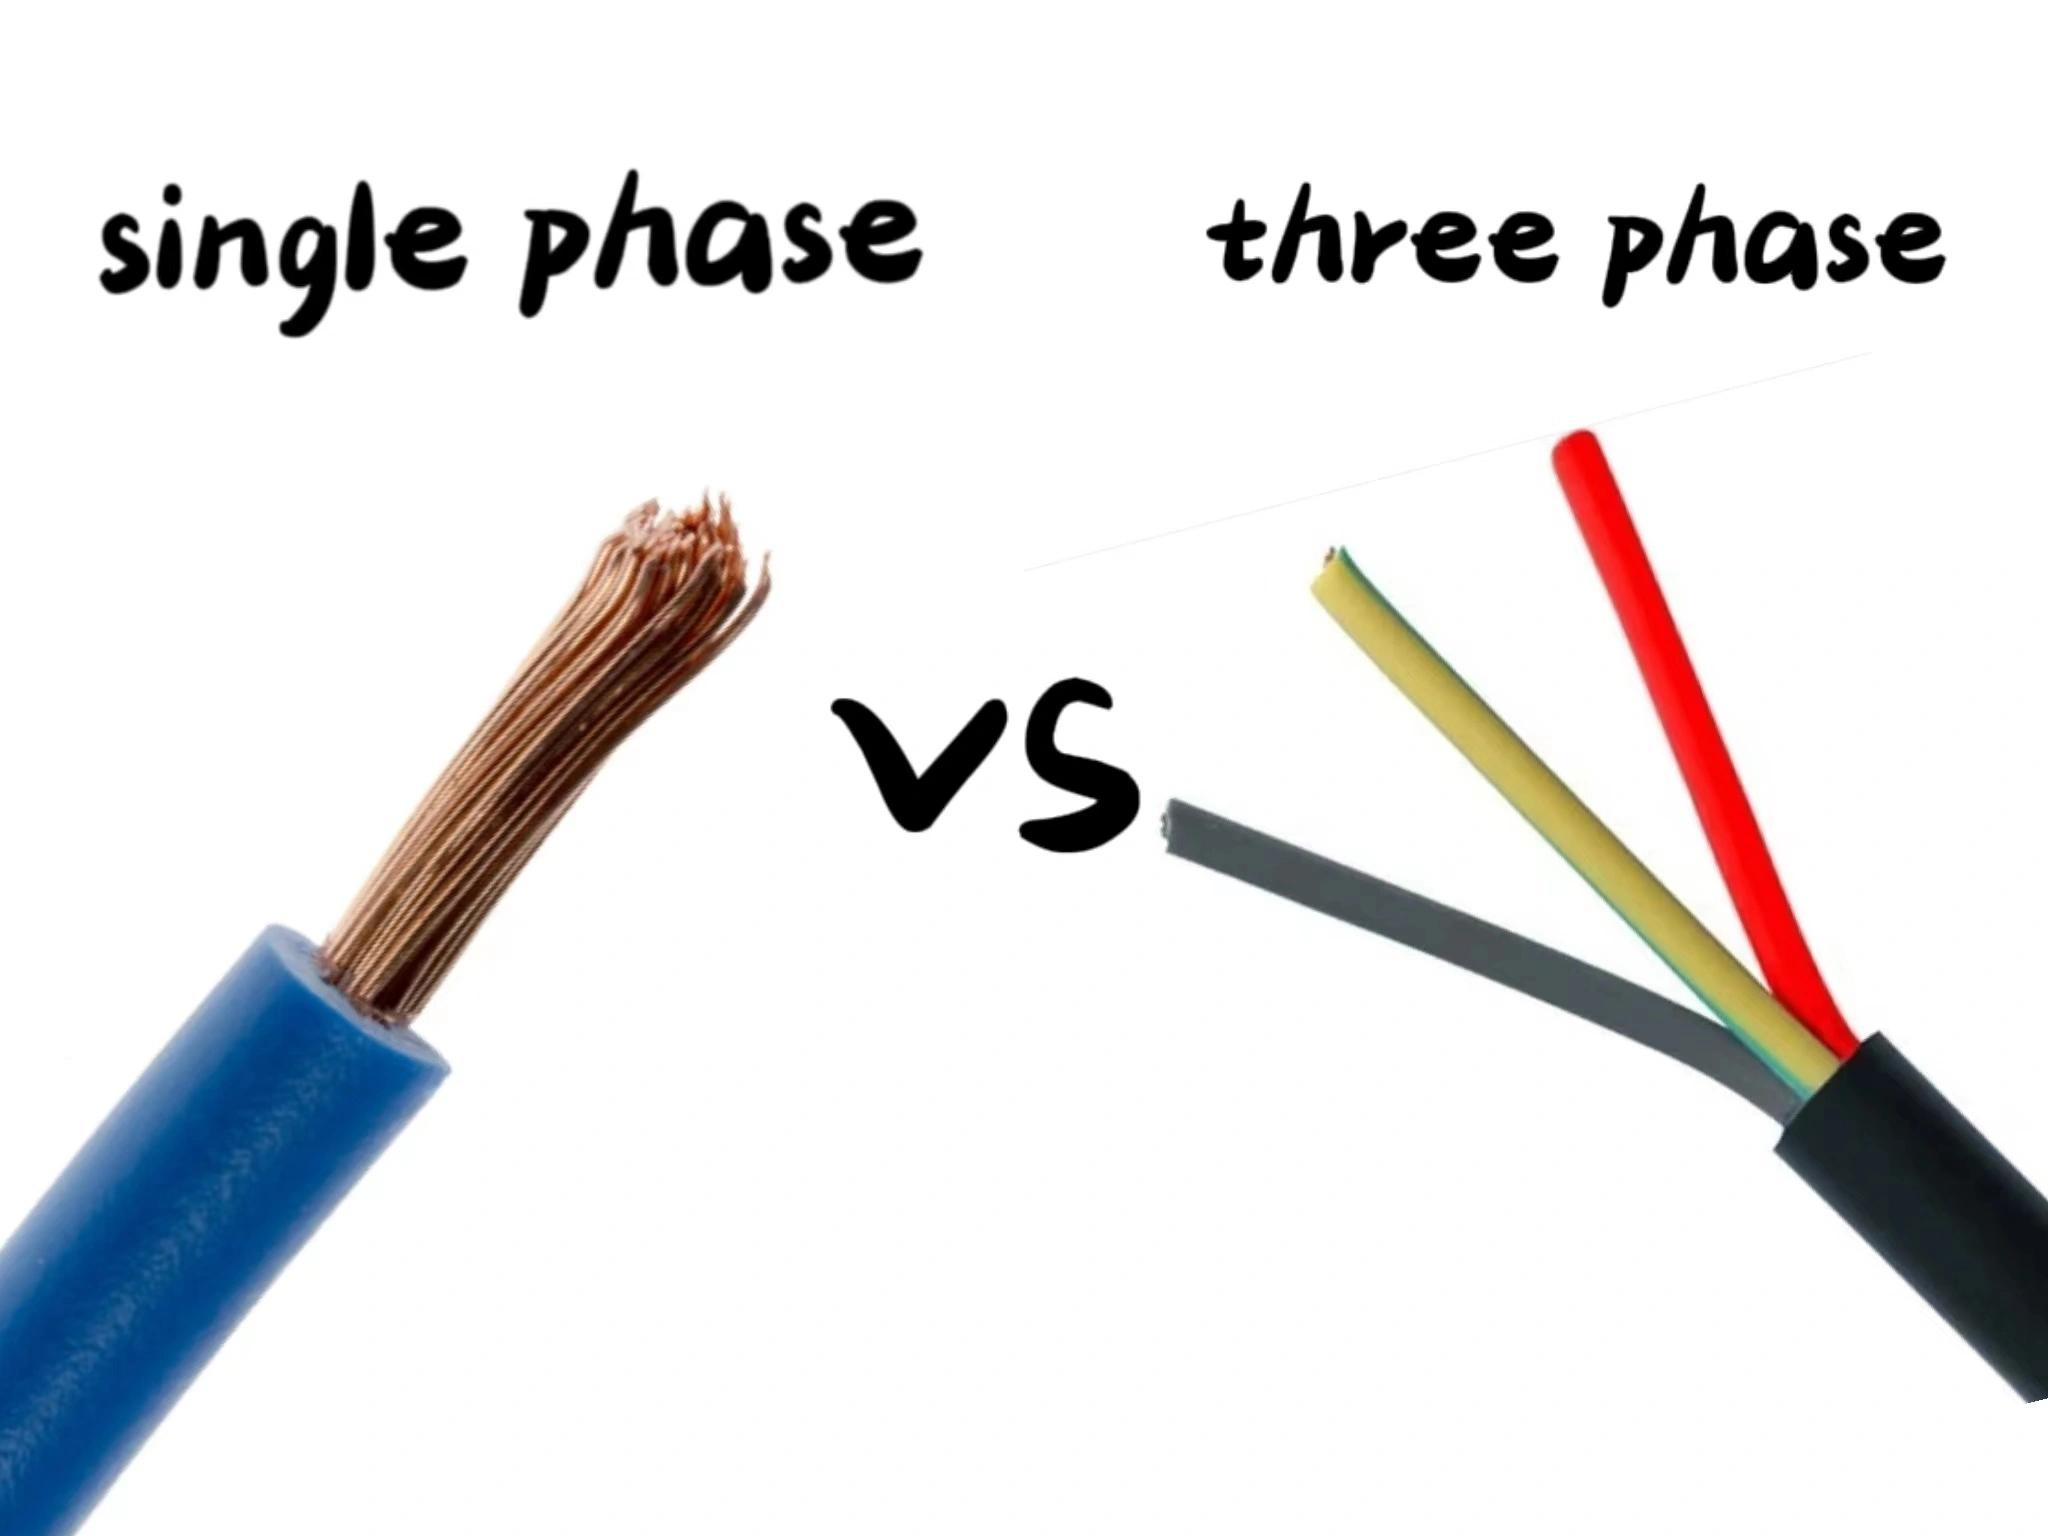 Single phase vs three phase